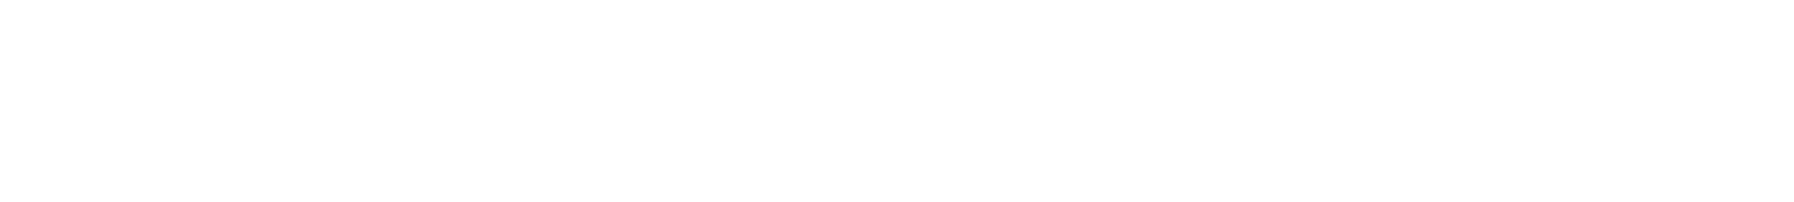 BFI network logo